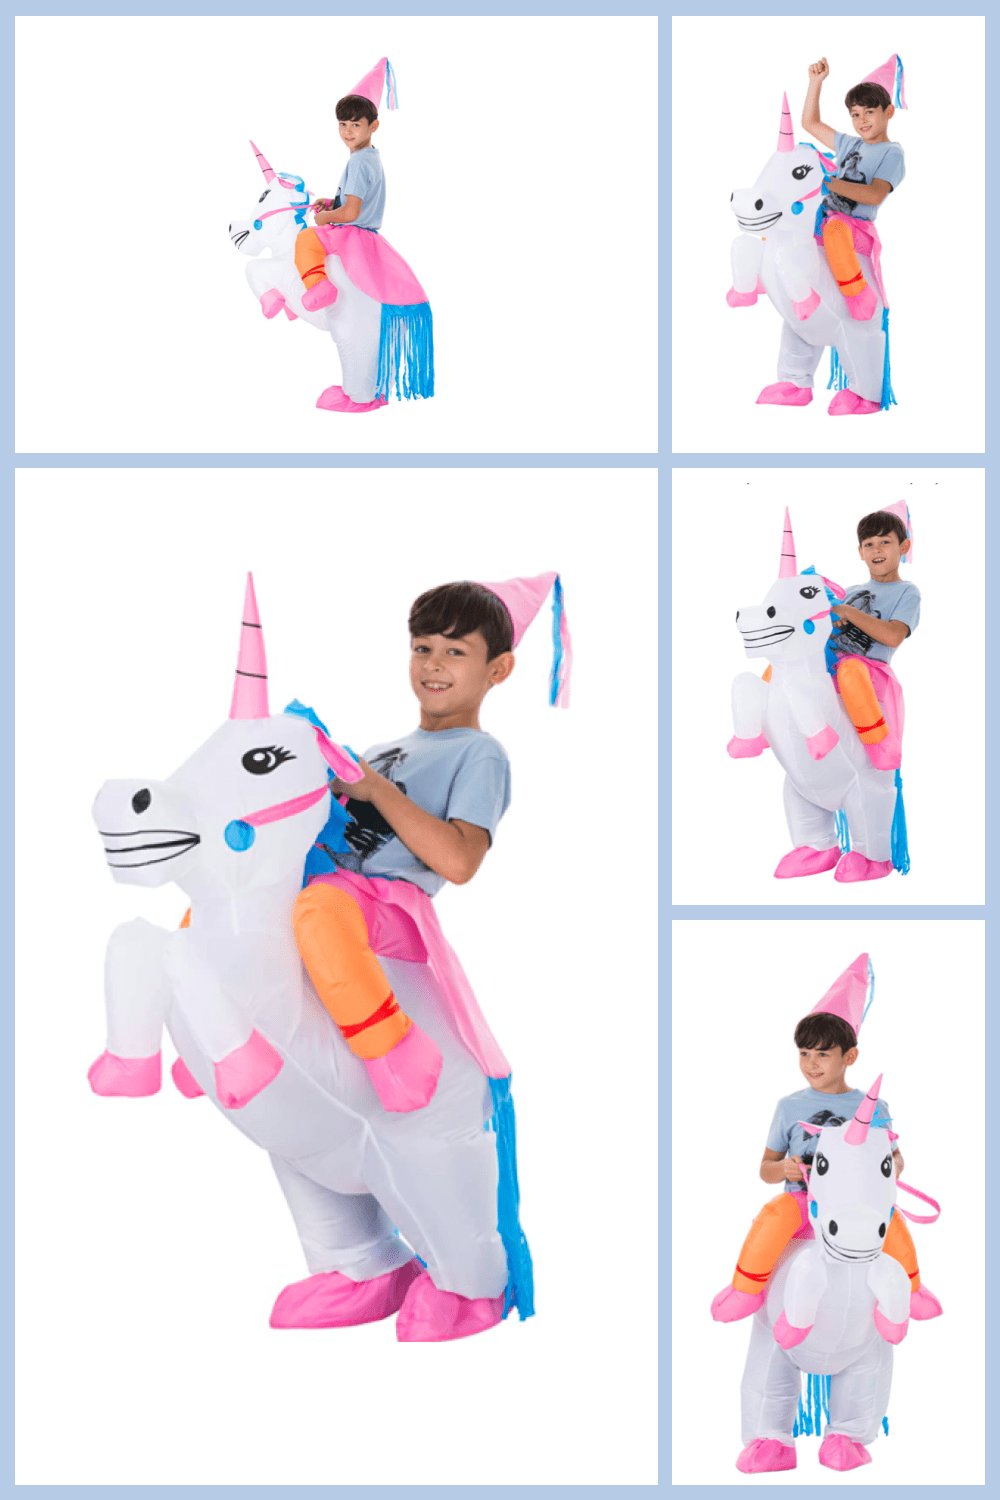 A real set for a prince on a unicorn.